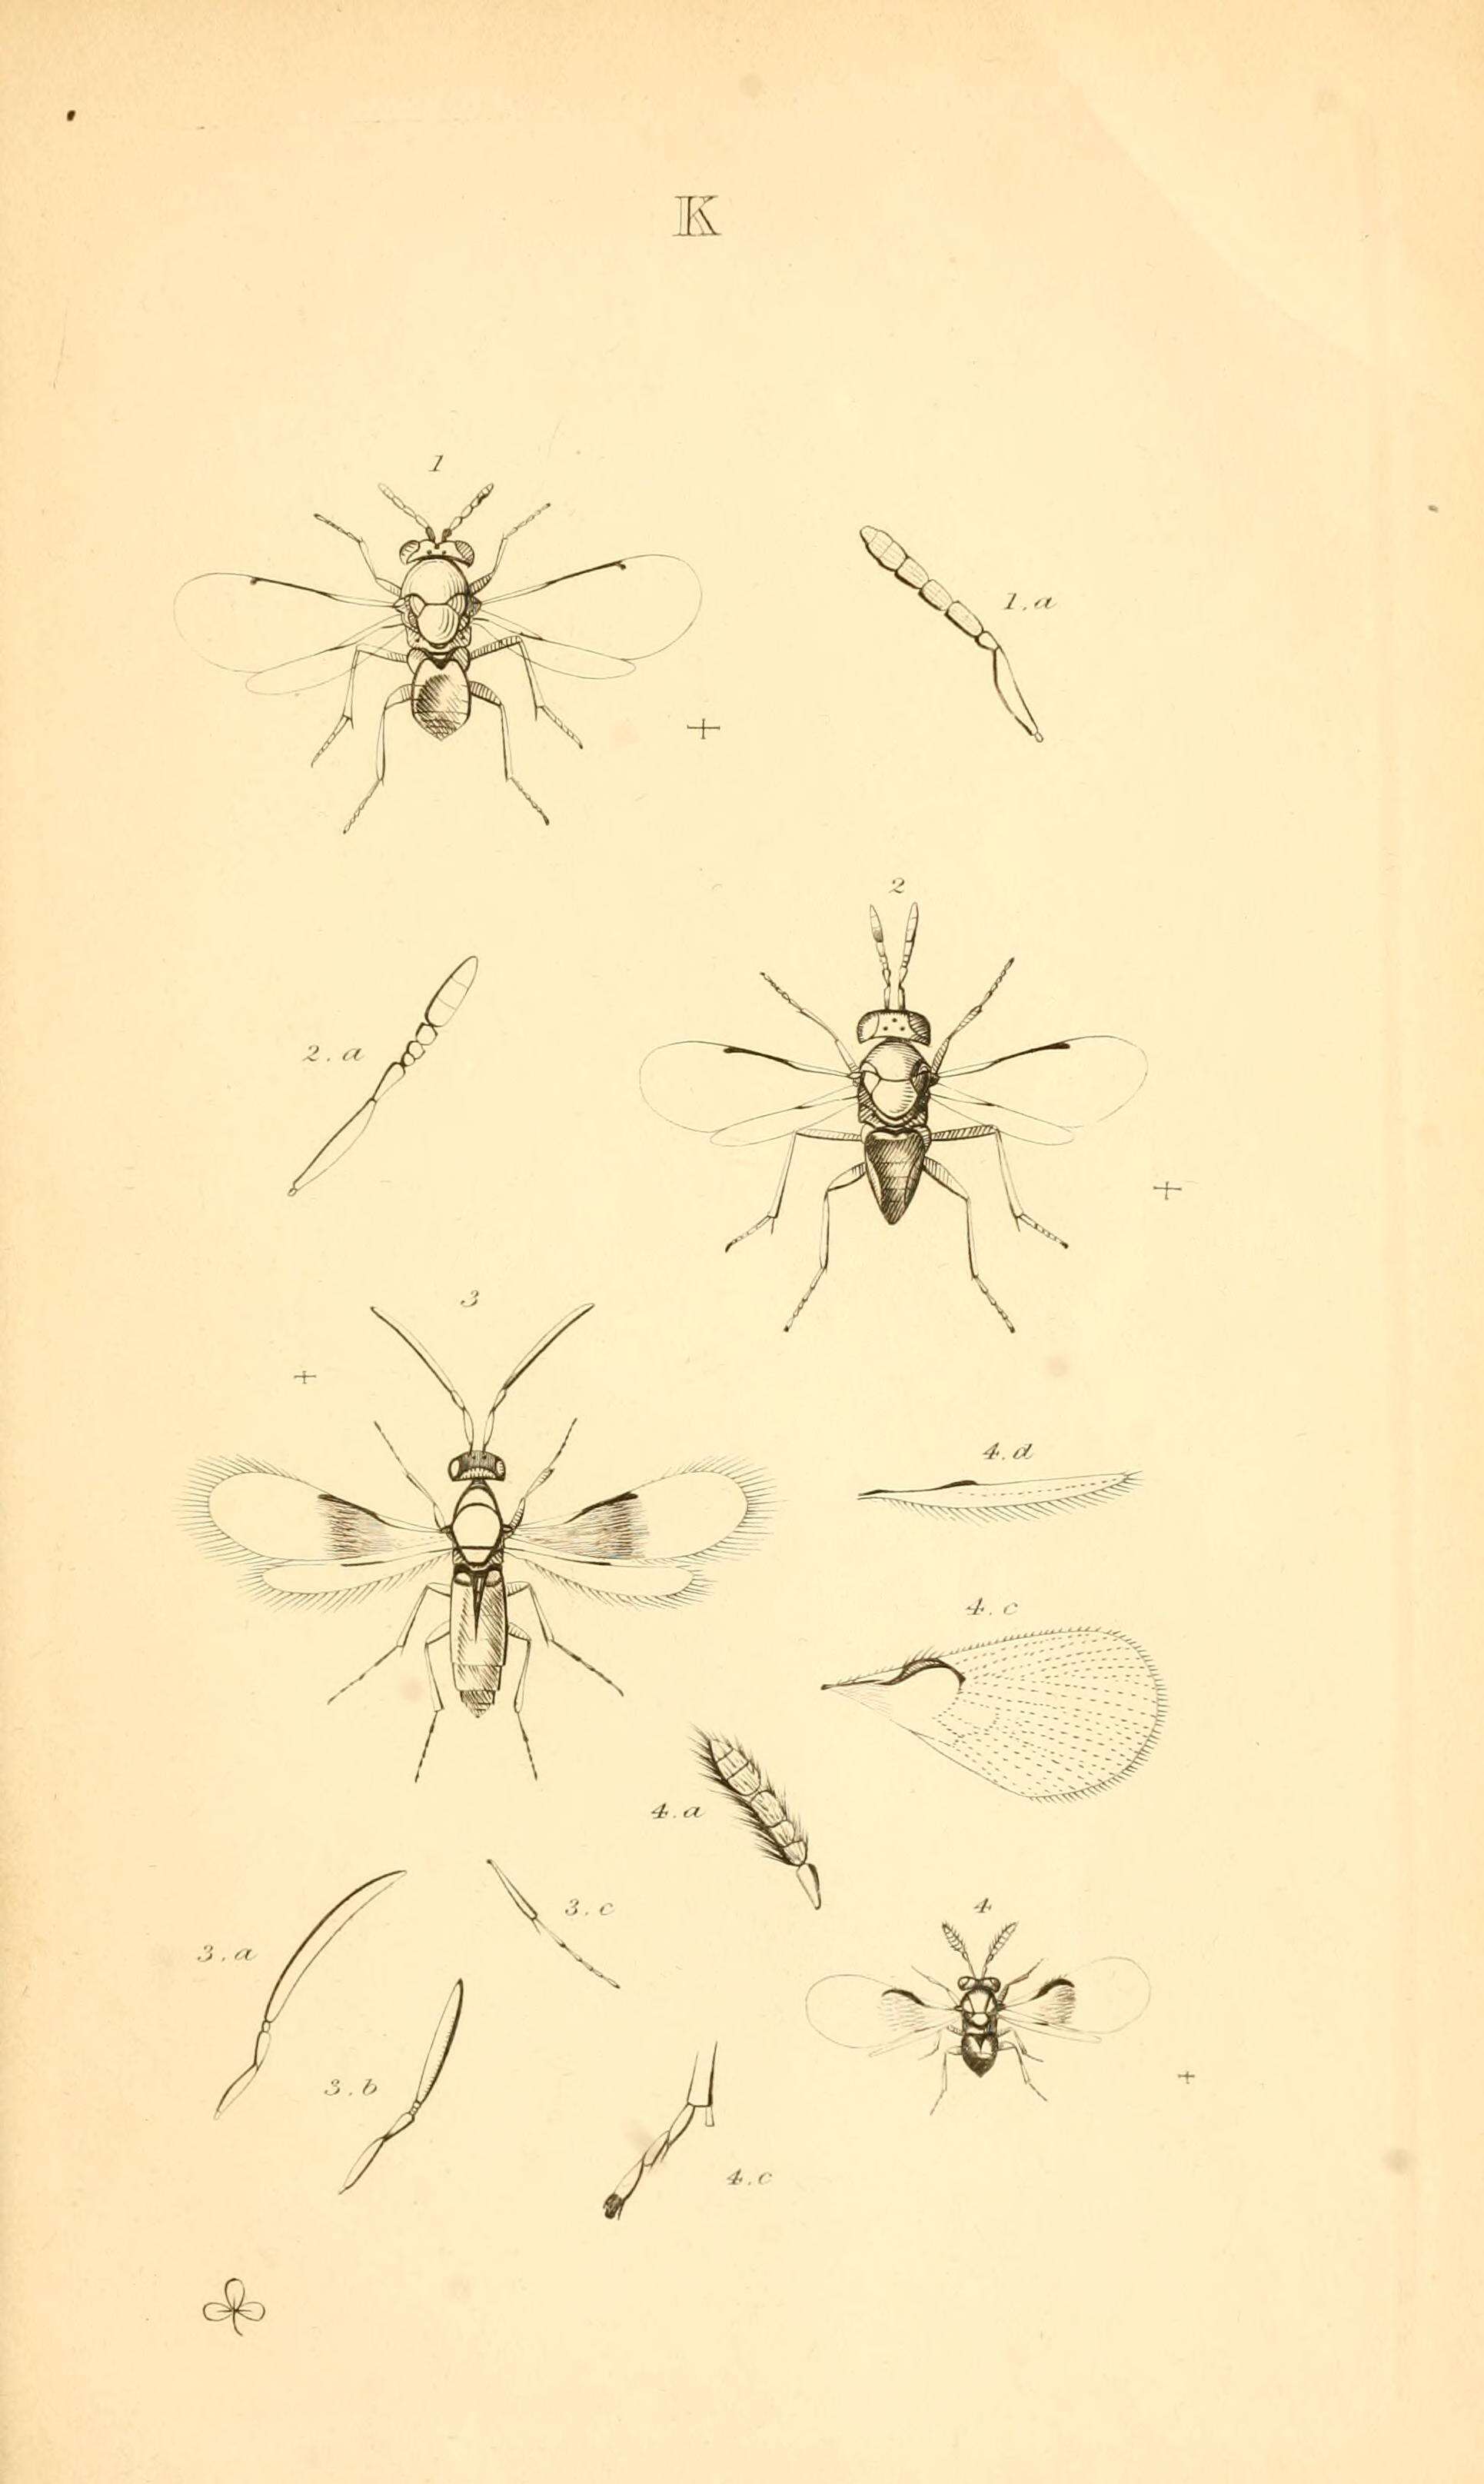 Aphelinus abdominalis (Dalman 1820) resmi